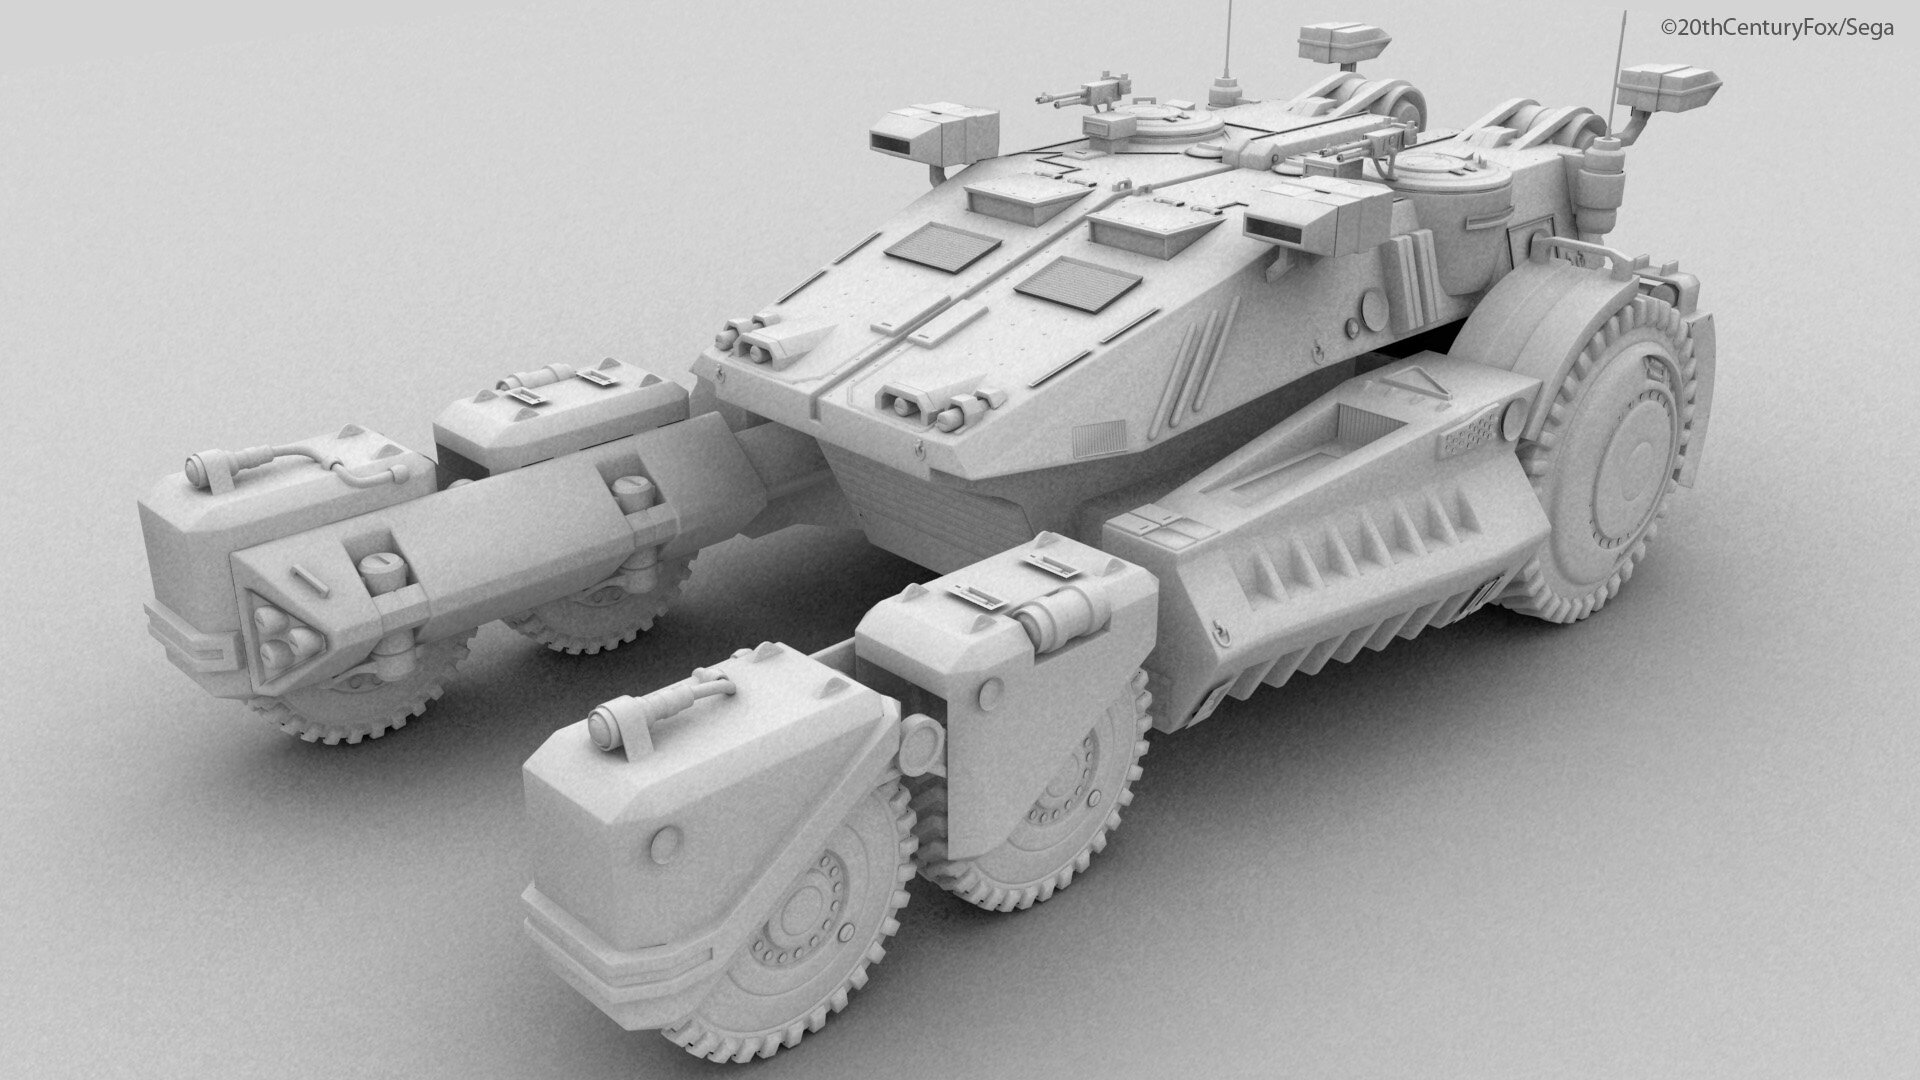 SEGA Aliens RPG Vehicle